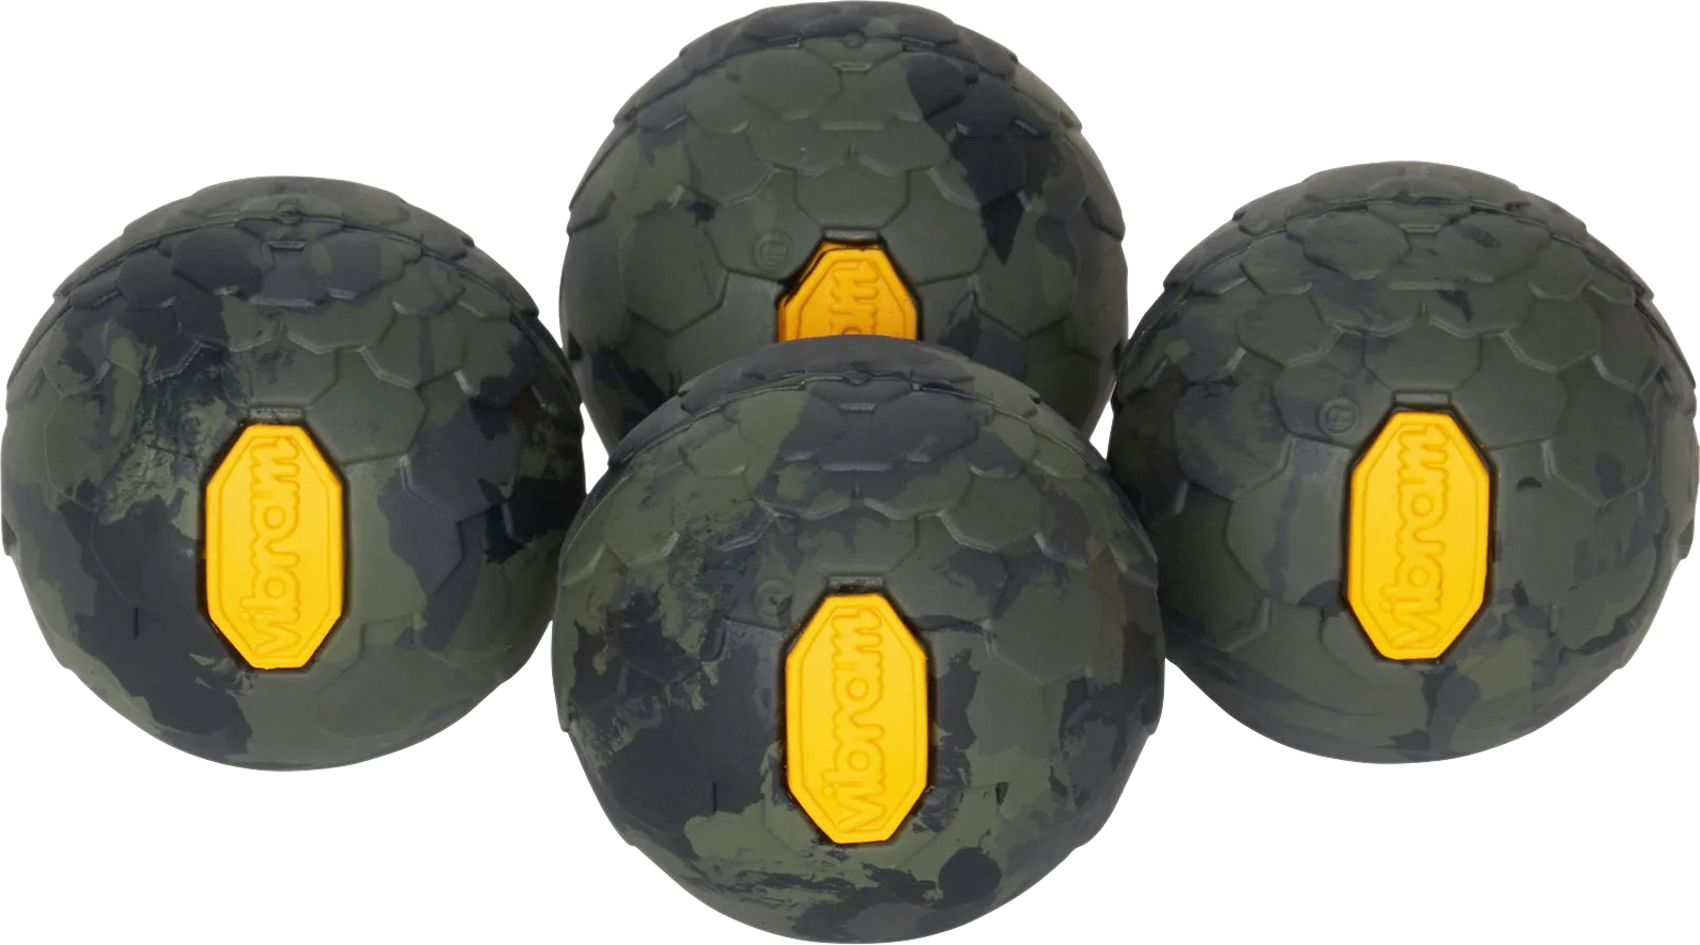 Helinox Vibram Ball Feet Set Gummifüße 55 mm Black Camo